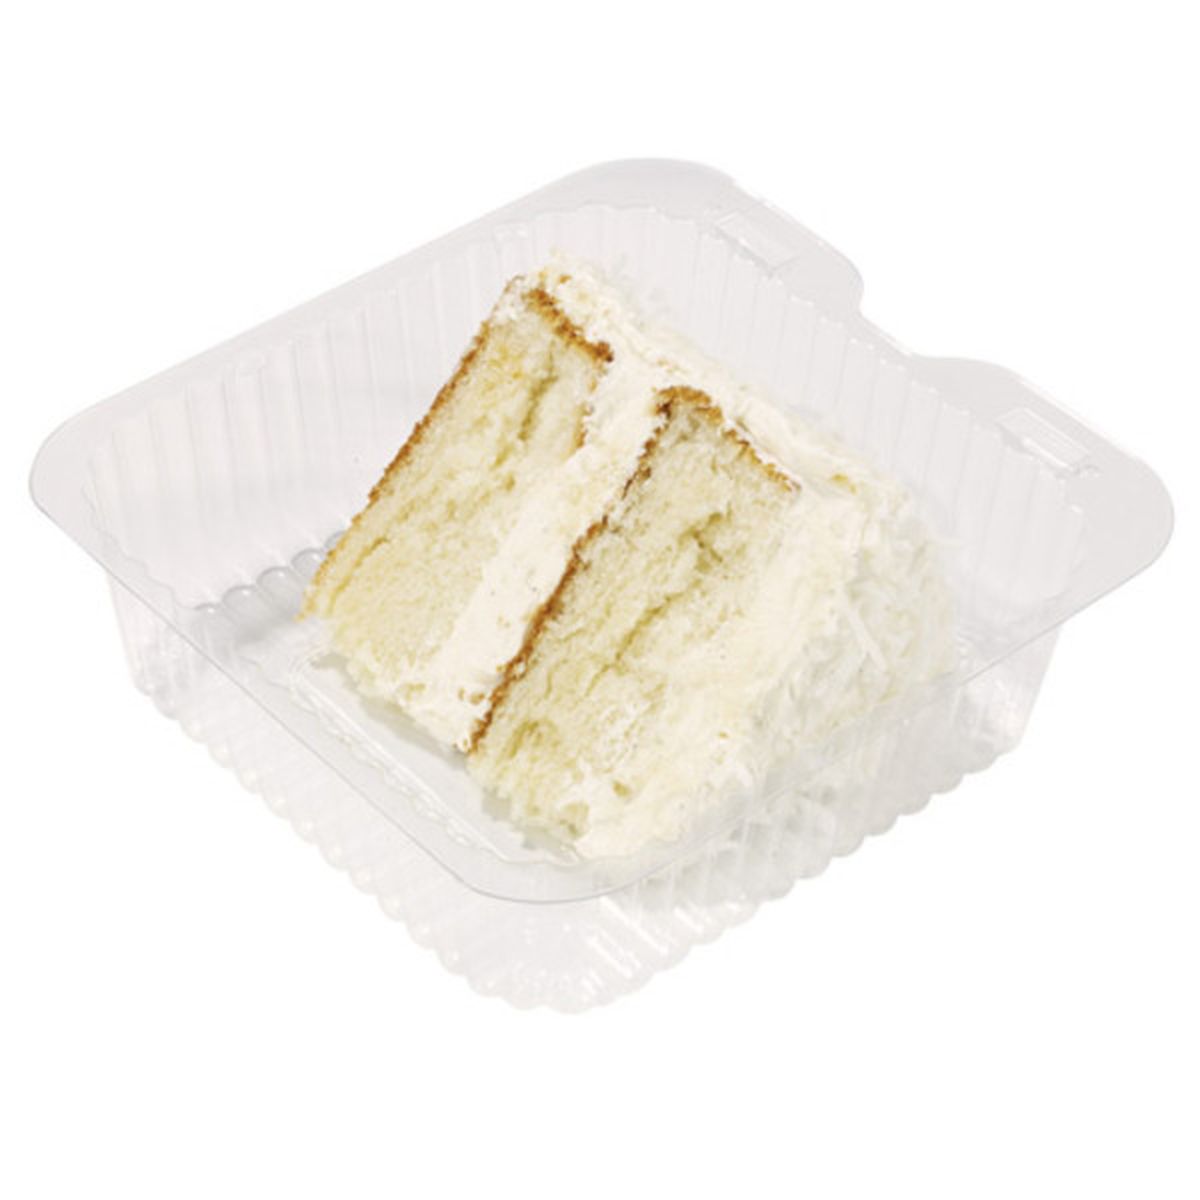 Calories in Wegmans Coconut Cake Slice